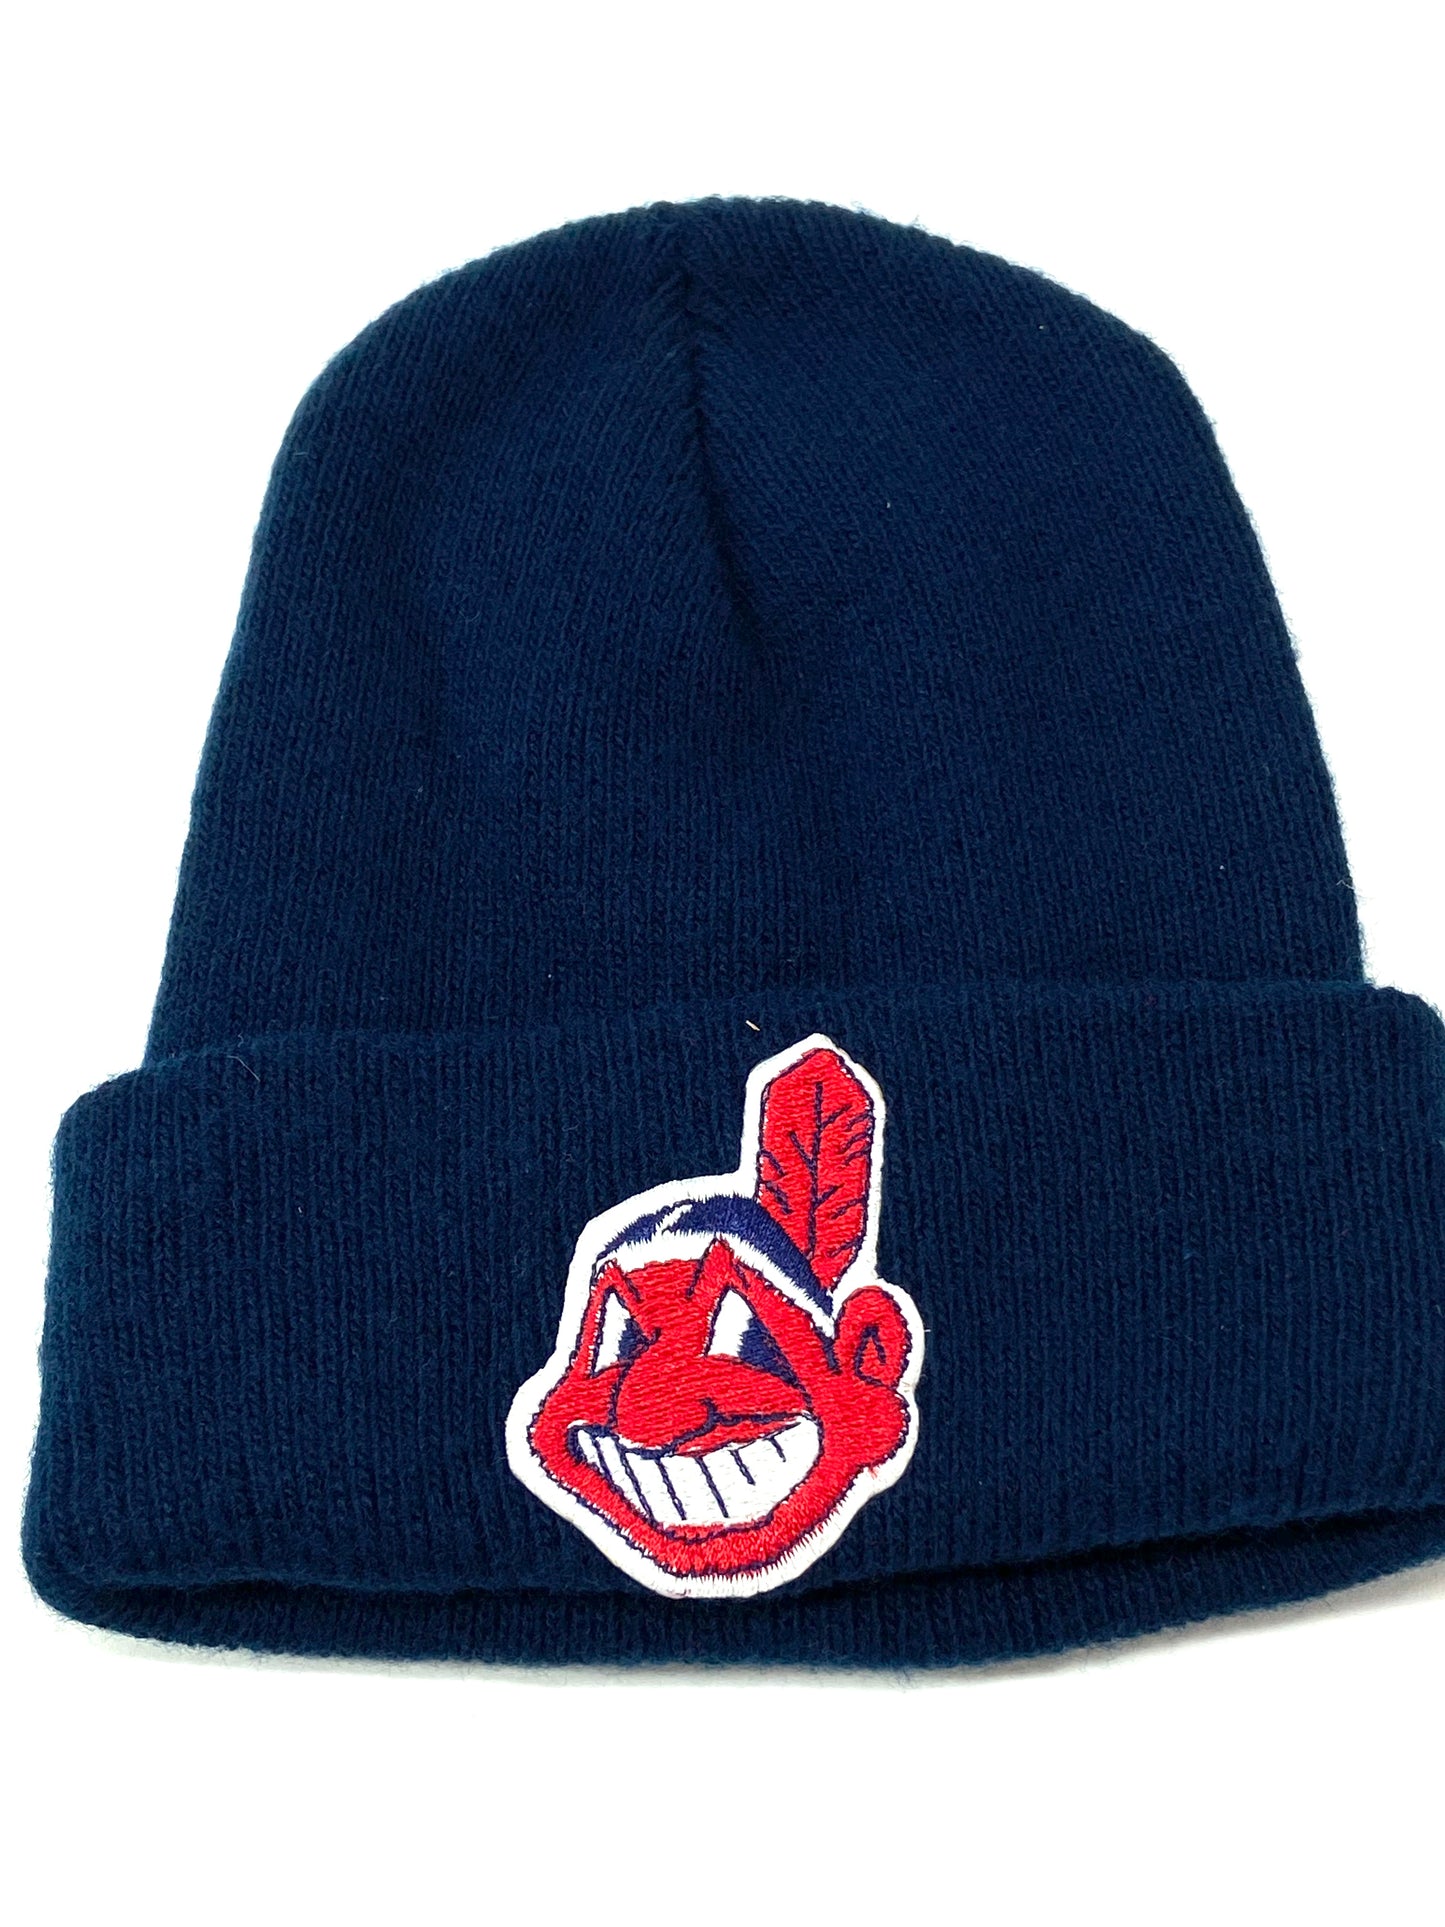 Cleveland Indians Vintage MLB Child's Knit Hat by Rossmor Industries